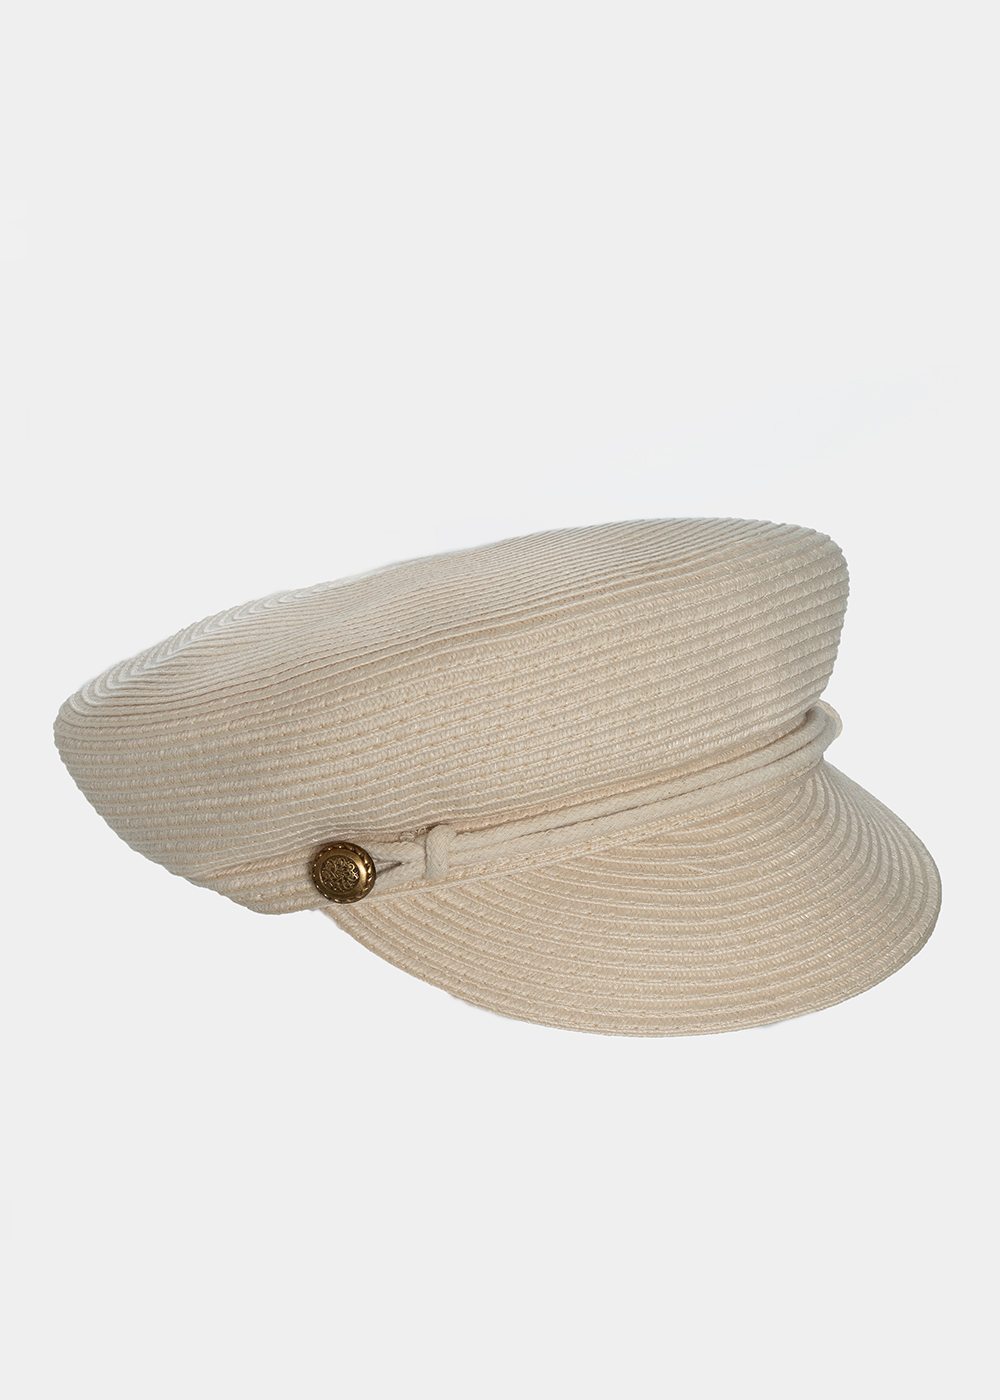 Beige, captain’s hat 